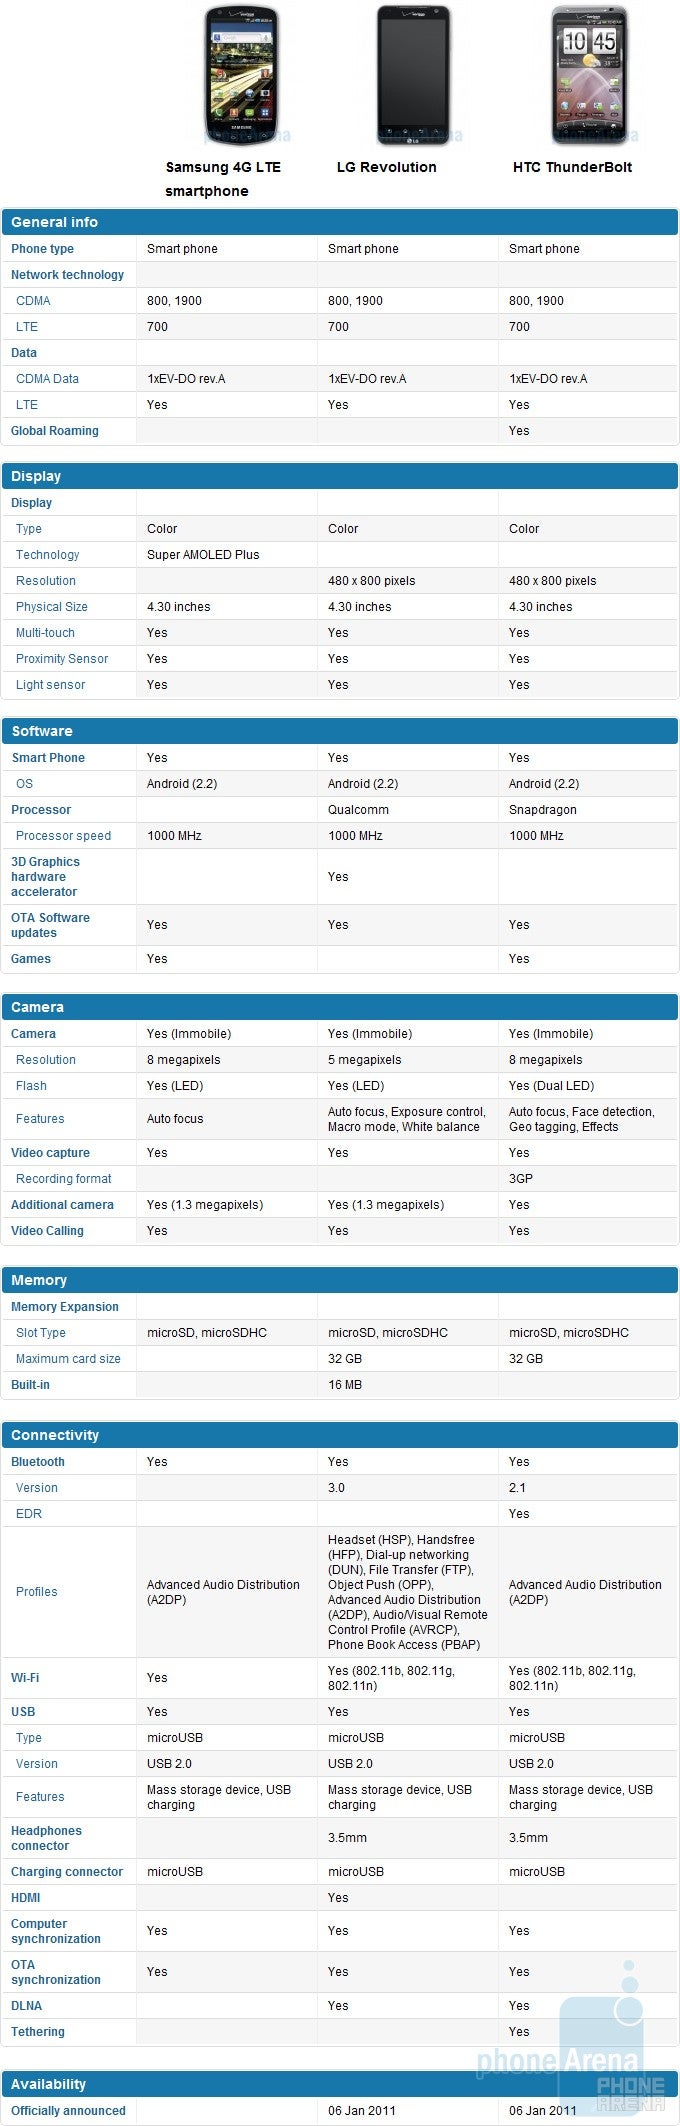 Verizon&#039;s Samsung 4G LTE smartphone vs LG Revolution vs HTC ThunderBolt